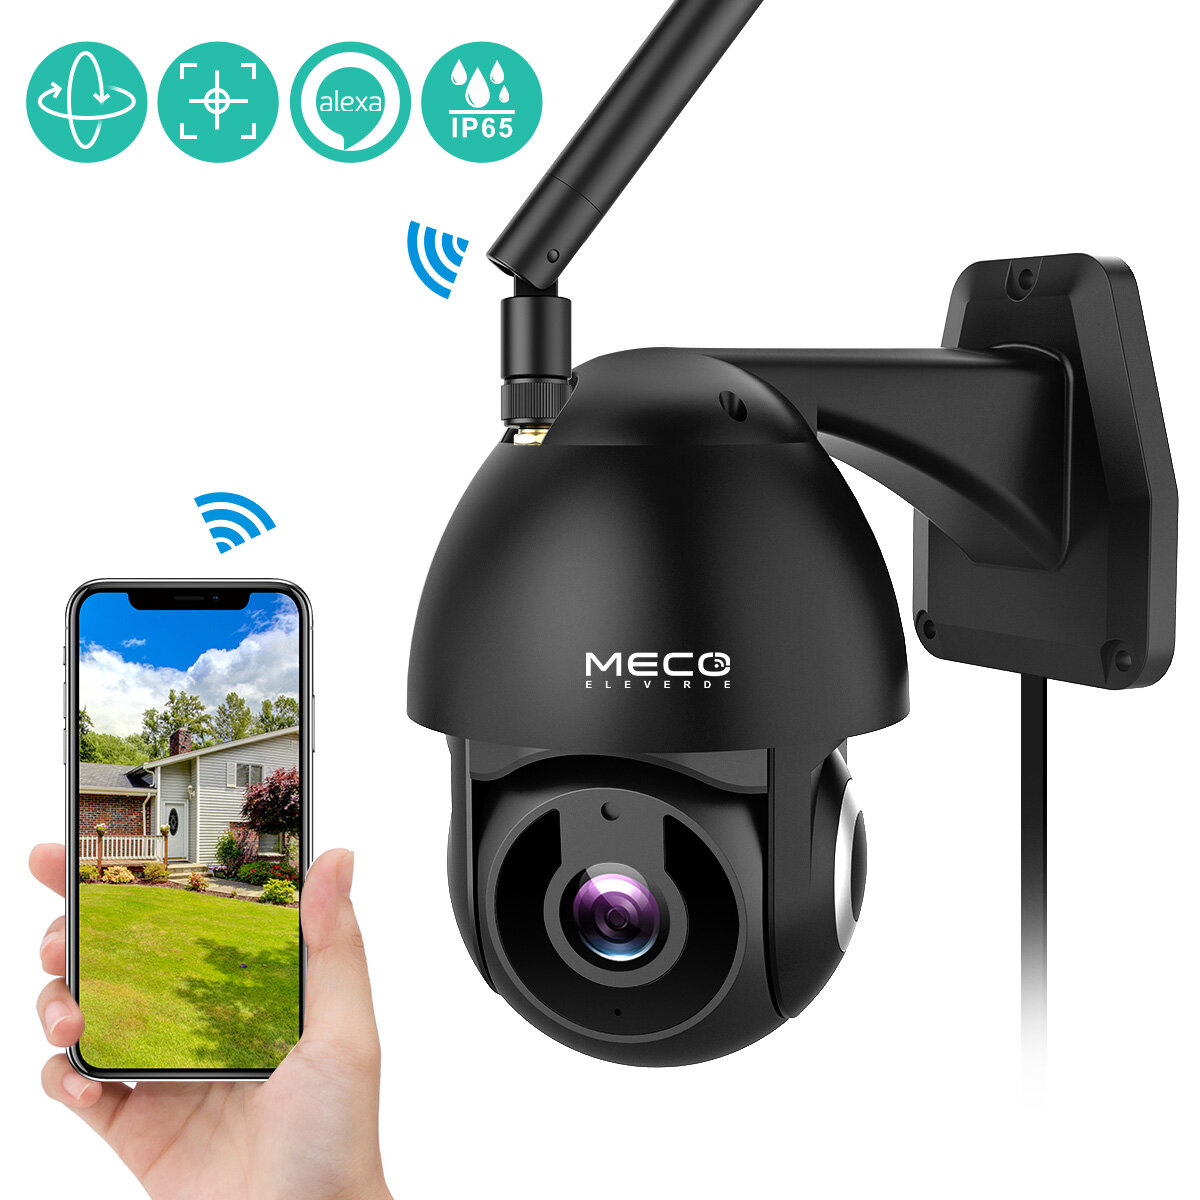 MECO 1080P Pan/Tilt/8X Zoom Security Camera Two Way Audio AI Humanoid Detection Cloud Storage Waterproof WiFi IP Camera